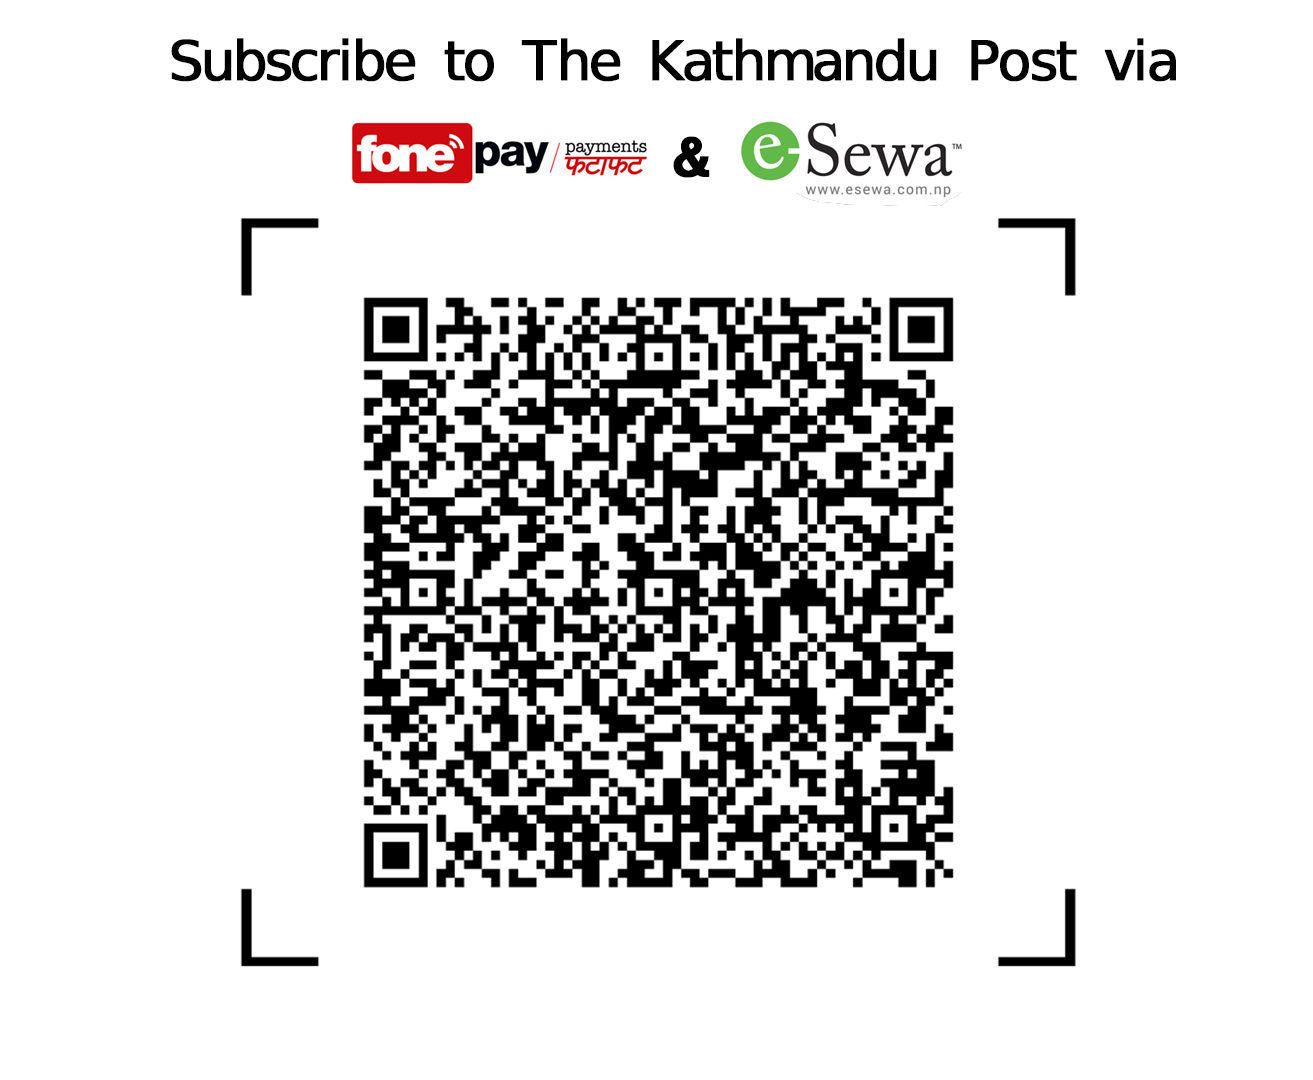 Kathmandu Post subscription barcode